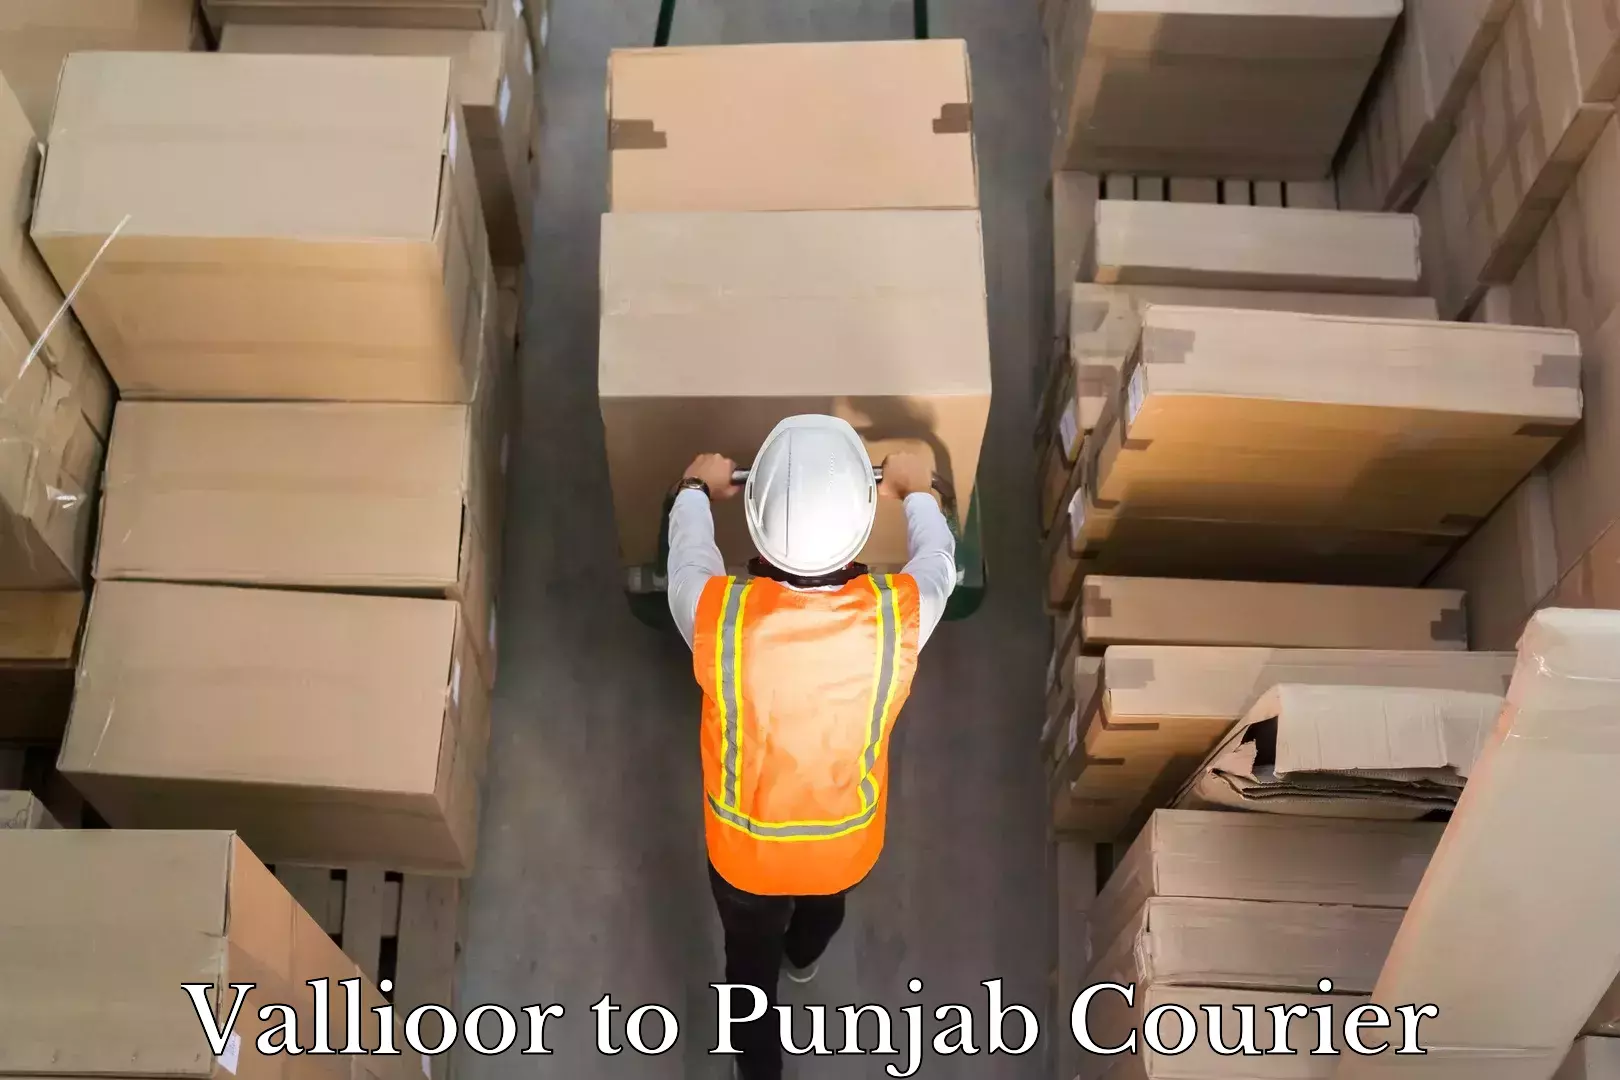 Quick dispatch service Vallioor to Punjab